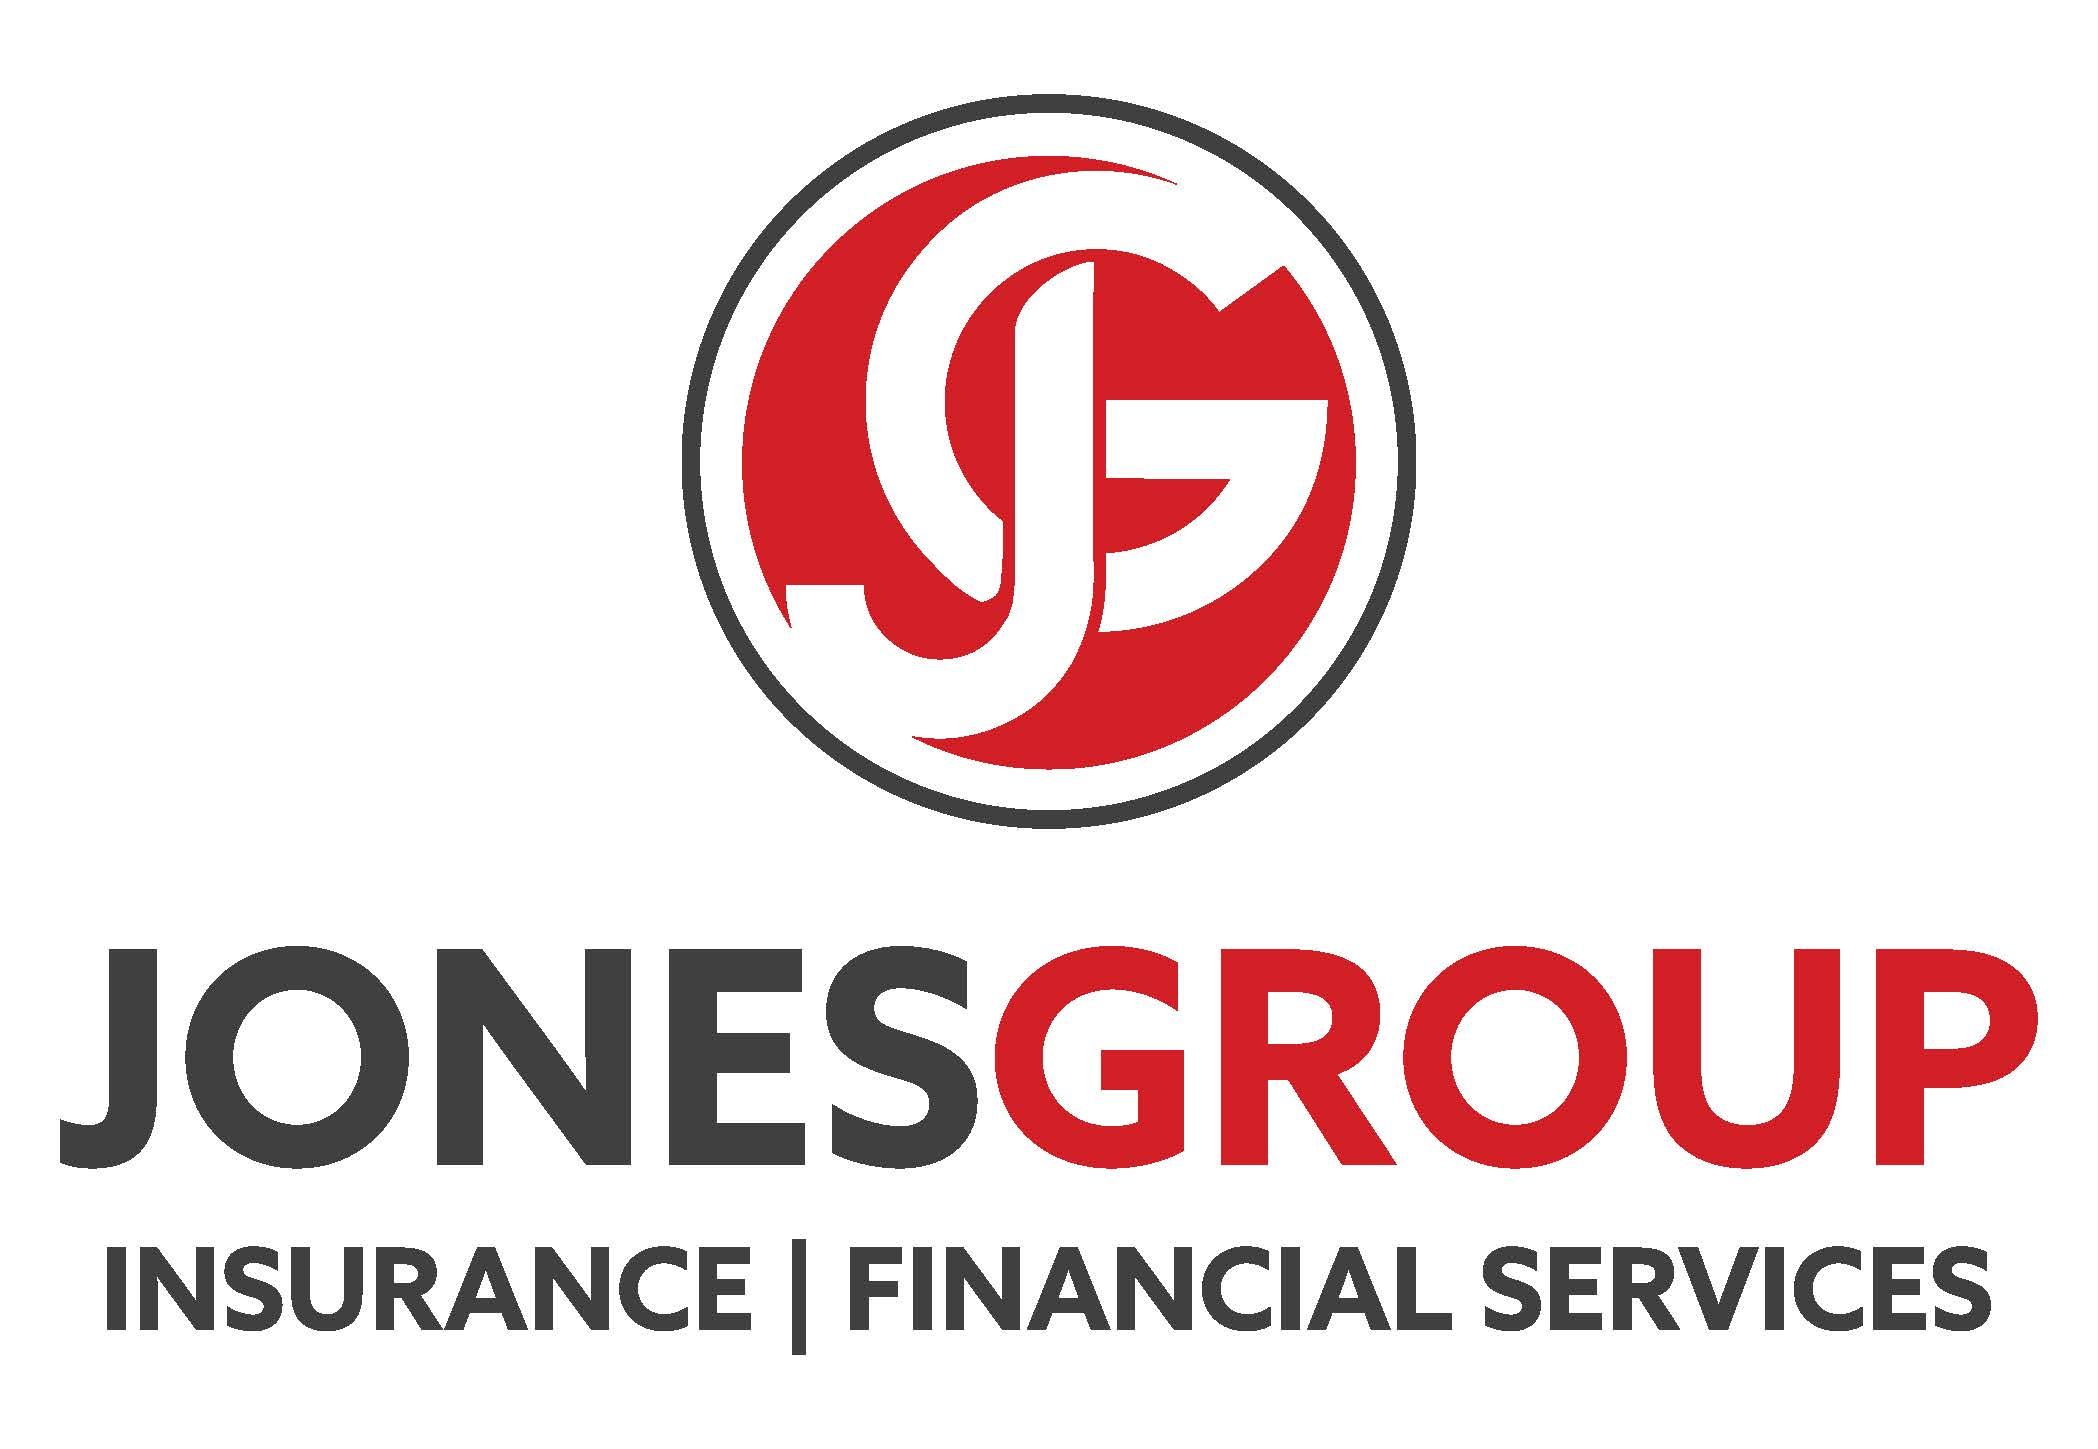 Jones Group Insurance | Financial Services